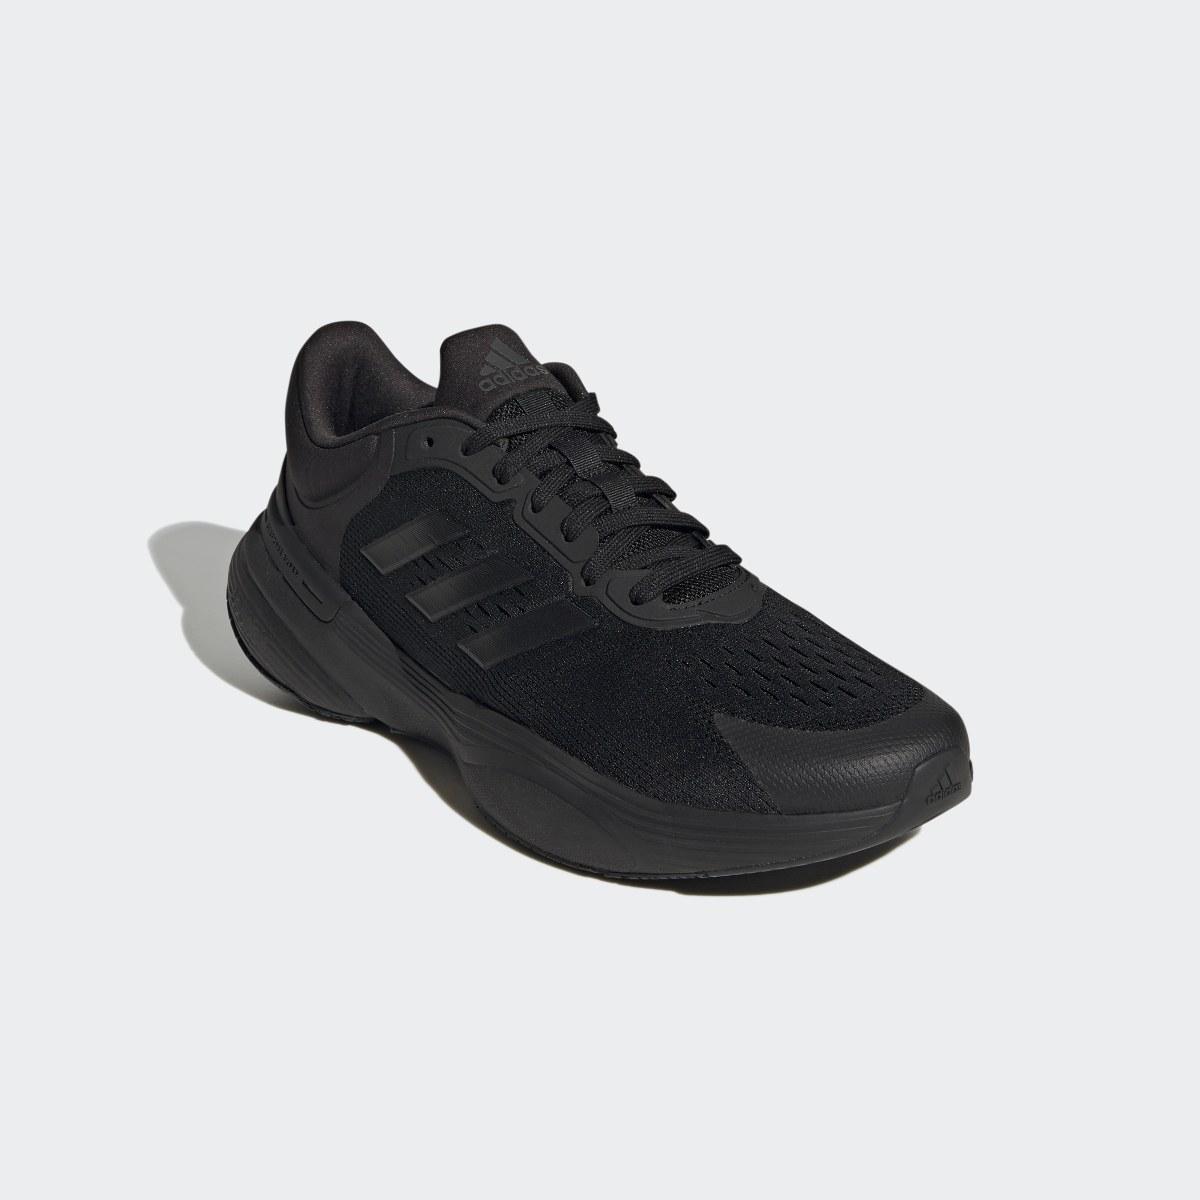 Adidas Response Super 3.0 Running Shoes. 5